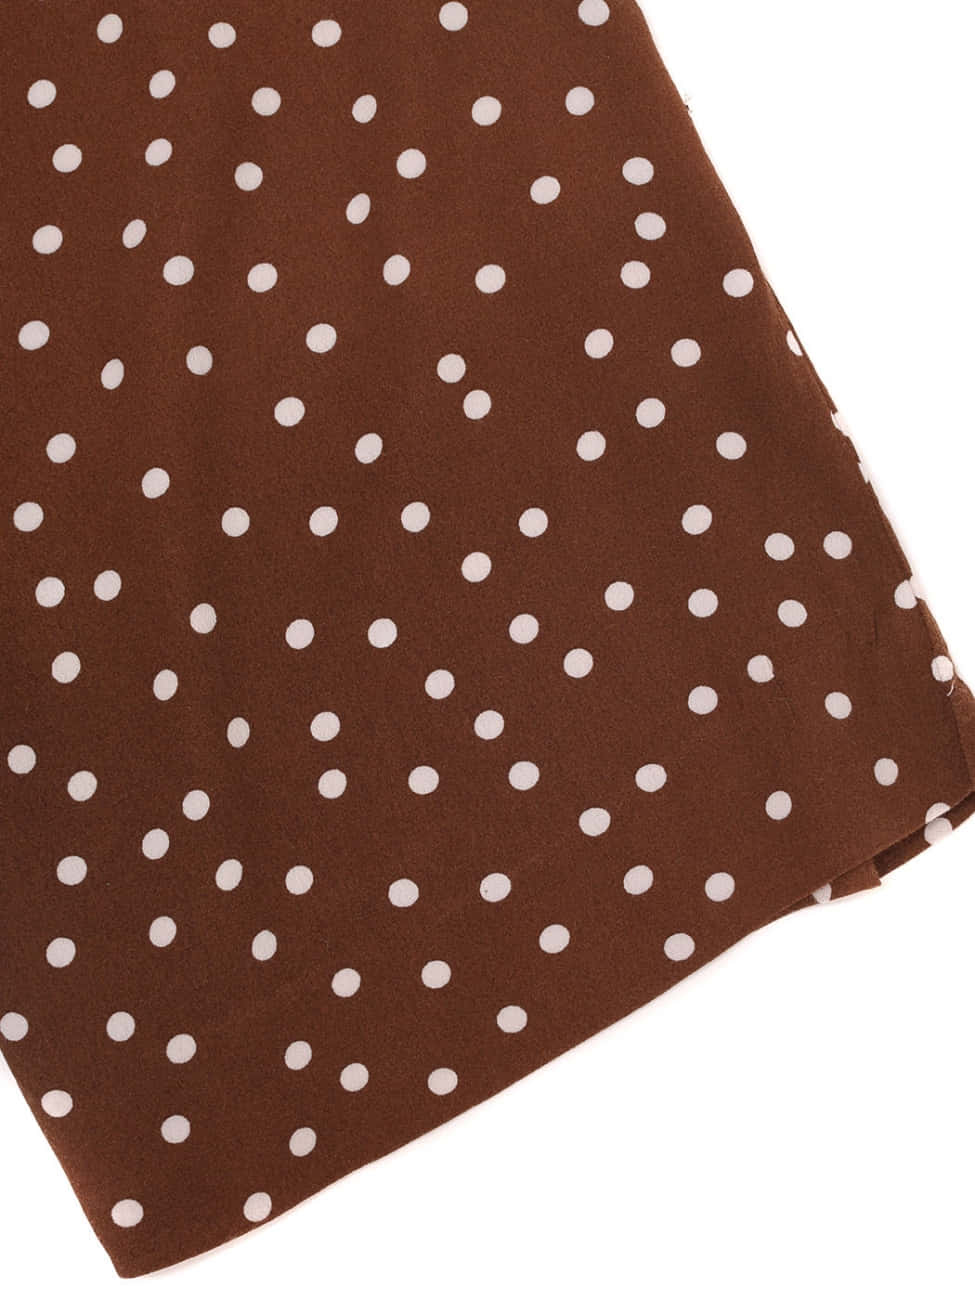 Classic Brown Polka Dot Pattern Wallpaper